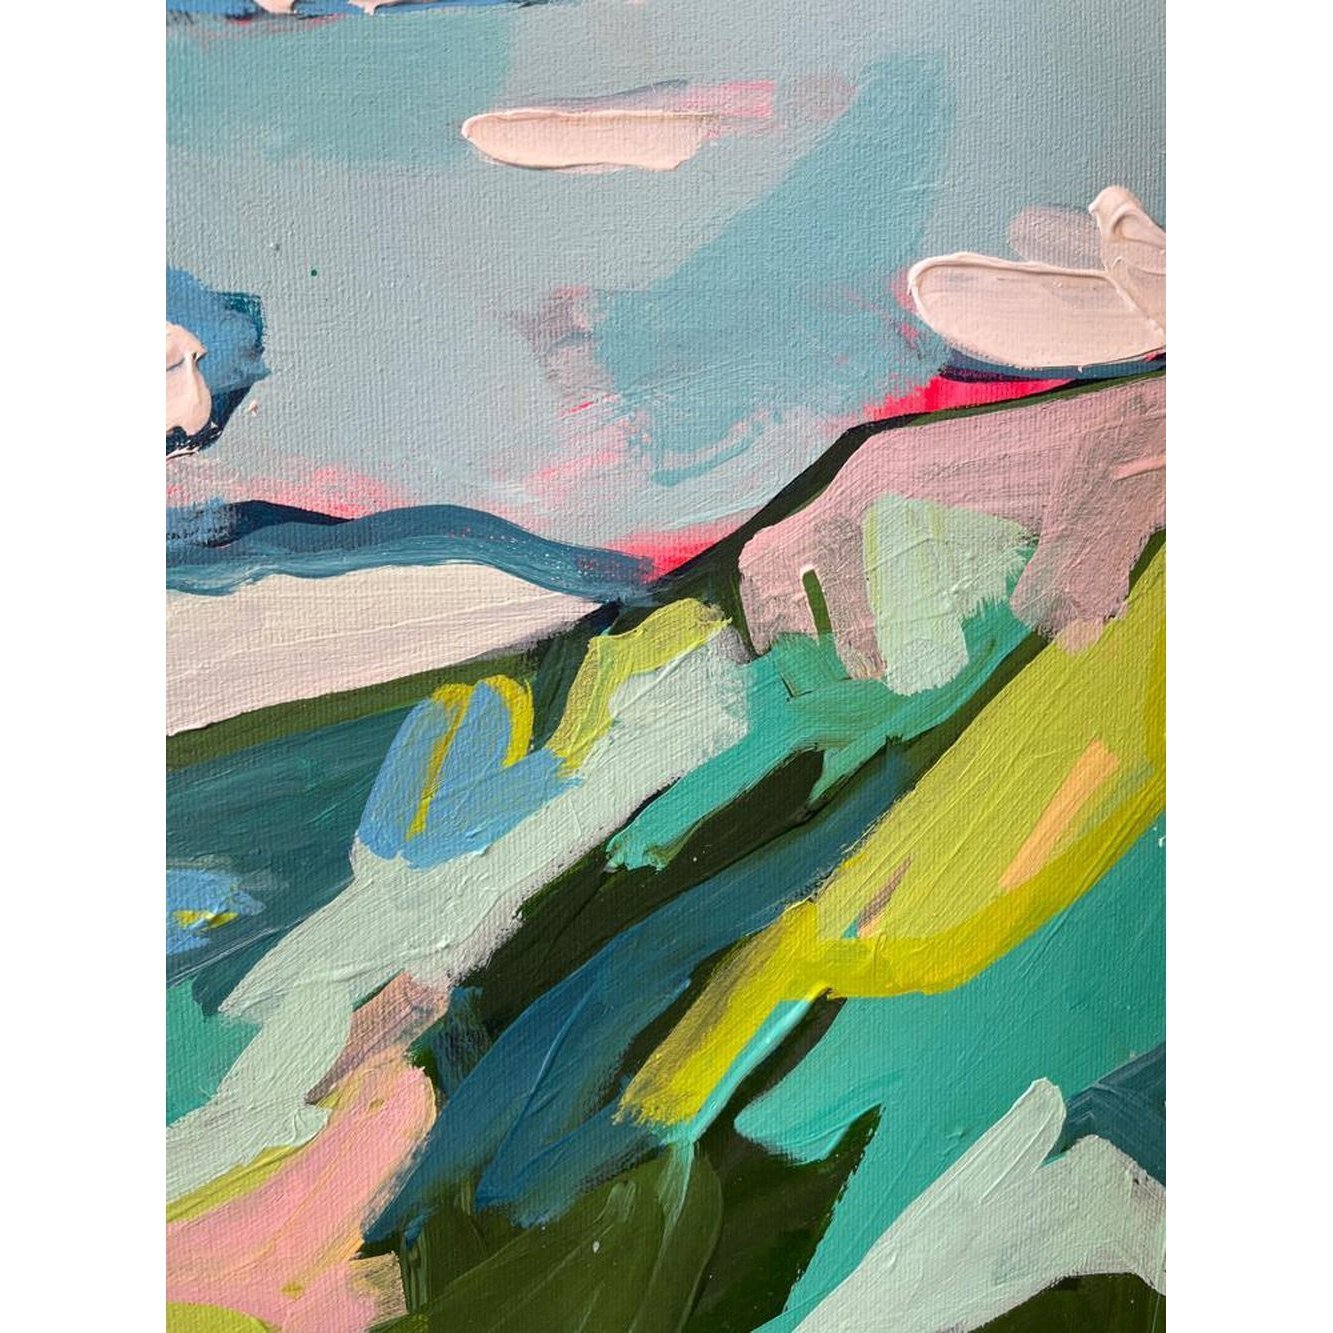 Ice Fields Parkway | 36x36 | Acrylic on Canvas-Original Painting-Amy Dixon Art + Design